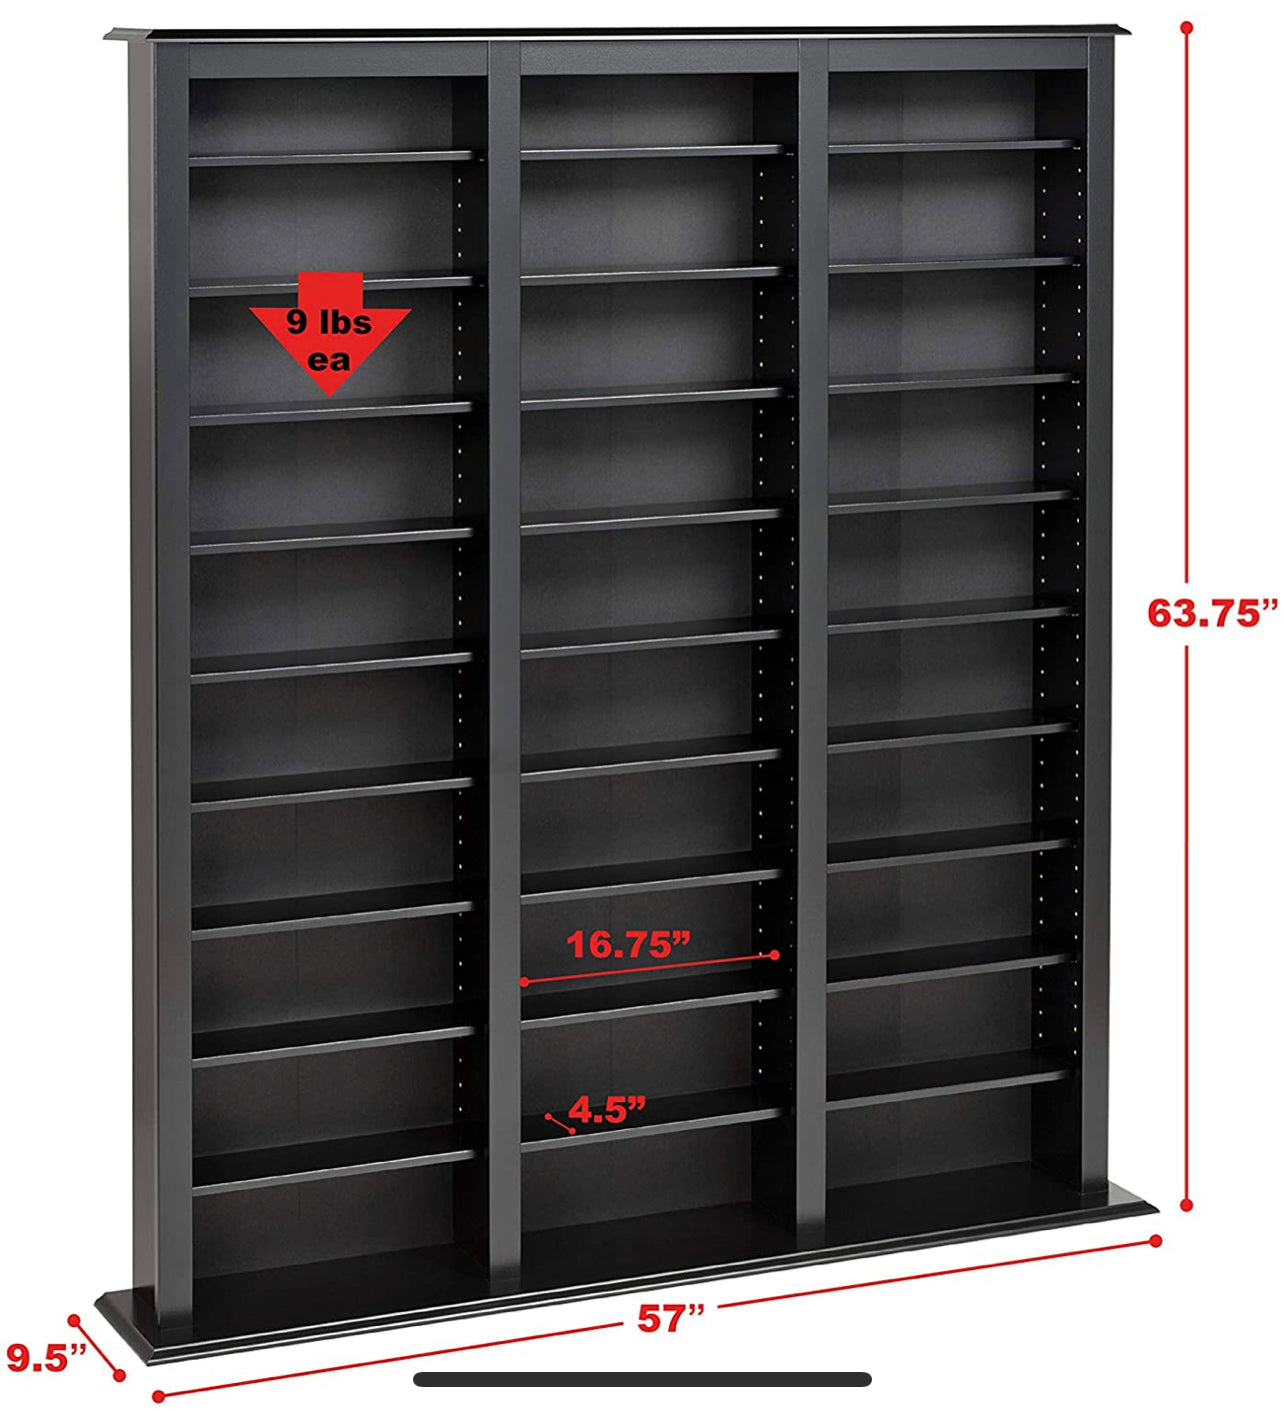 Prepac Triple Width Barrister Tower Storage Cabinet, Black Discount Bros, LLC.